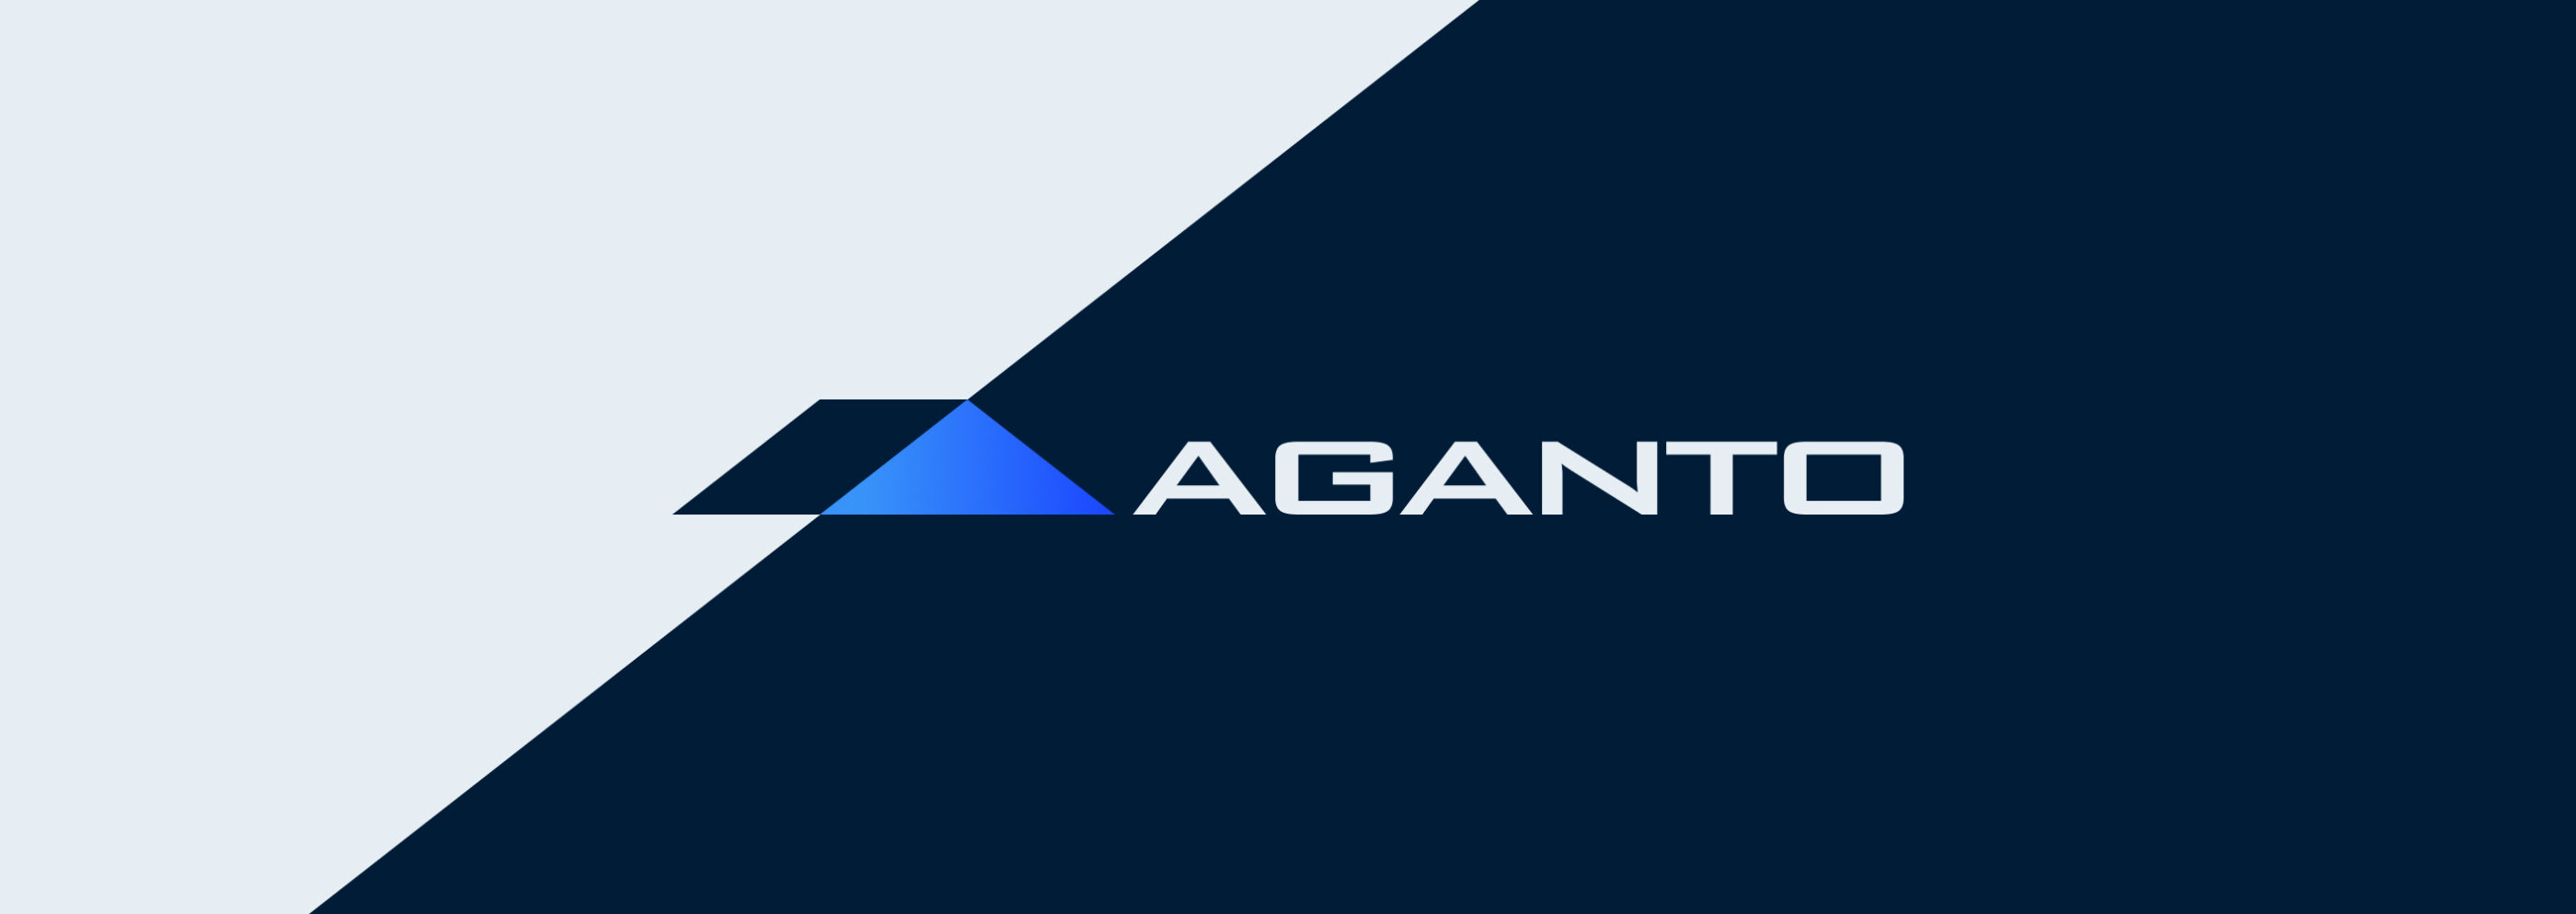 Aganto Logo Hero Desktop